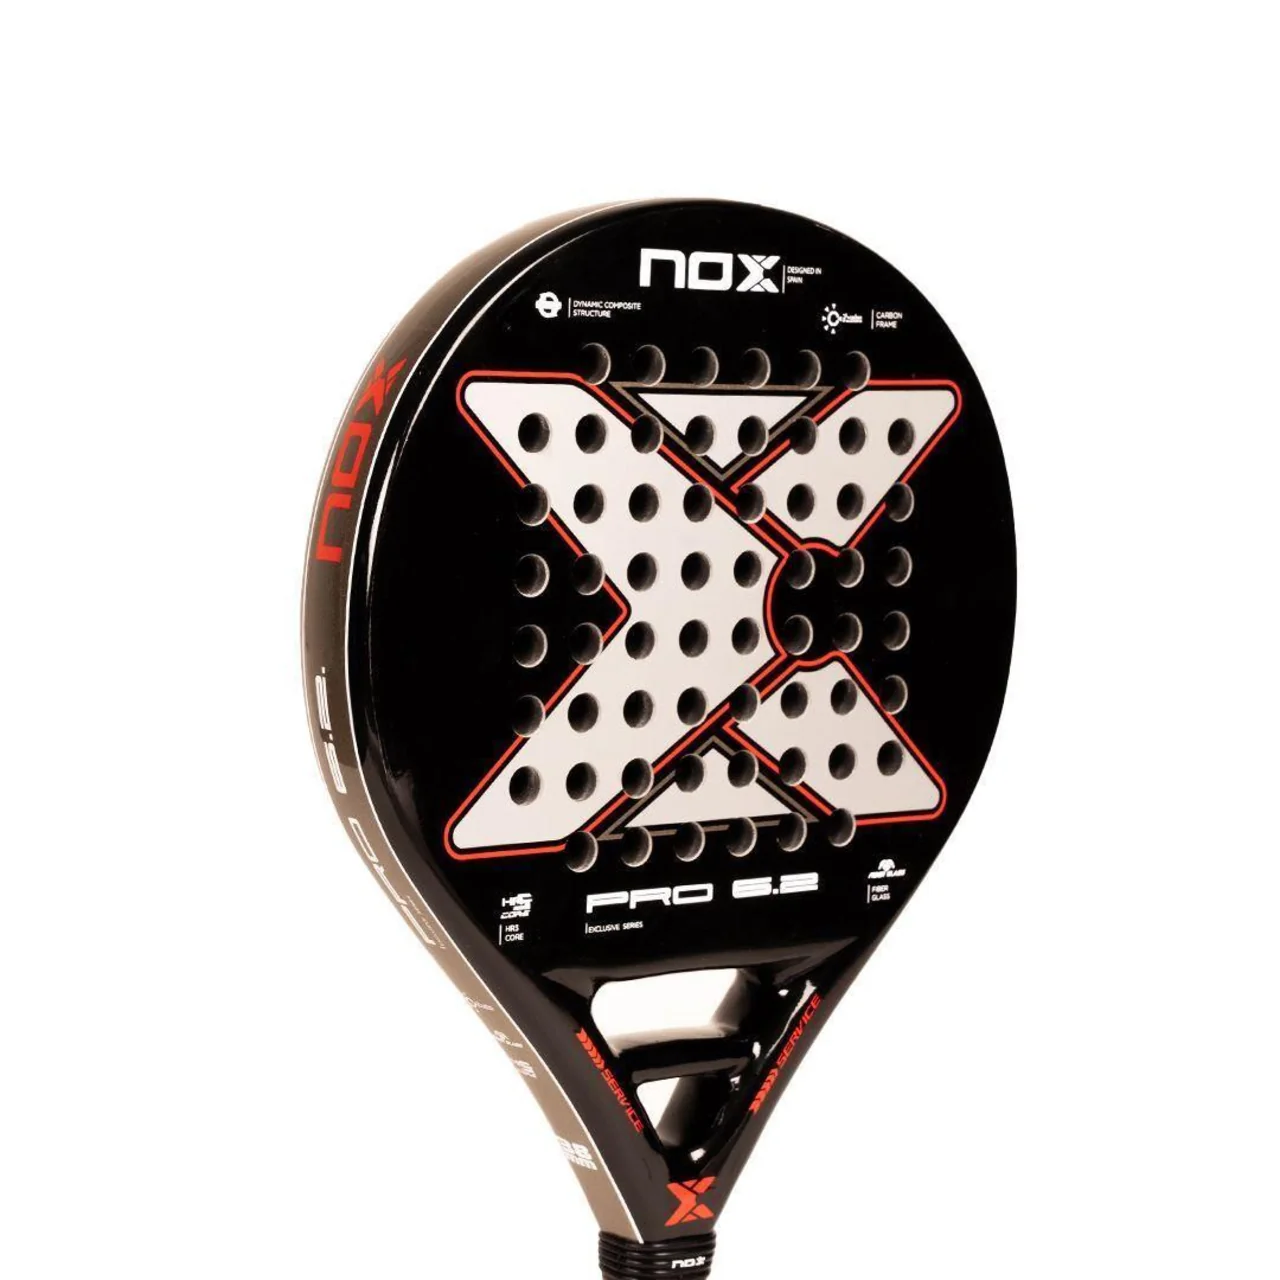 Nox Pro 6.2 Limited Edition